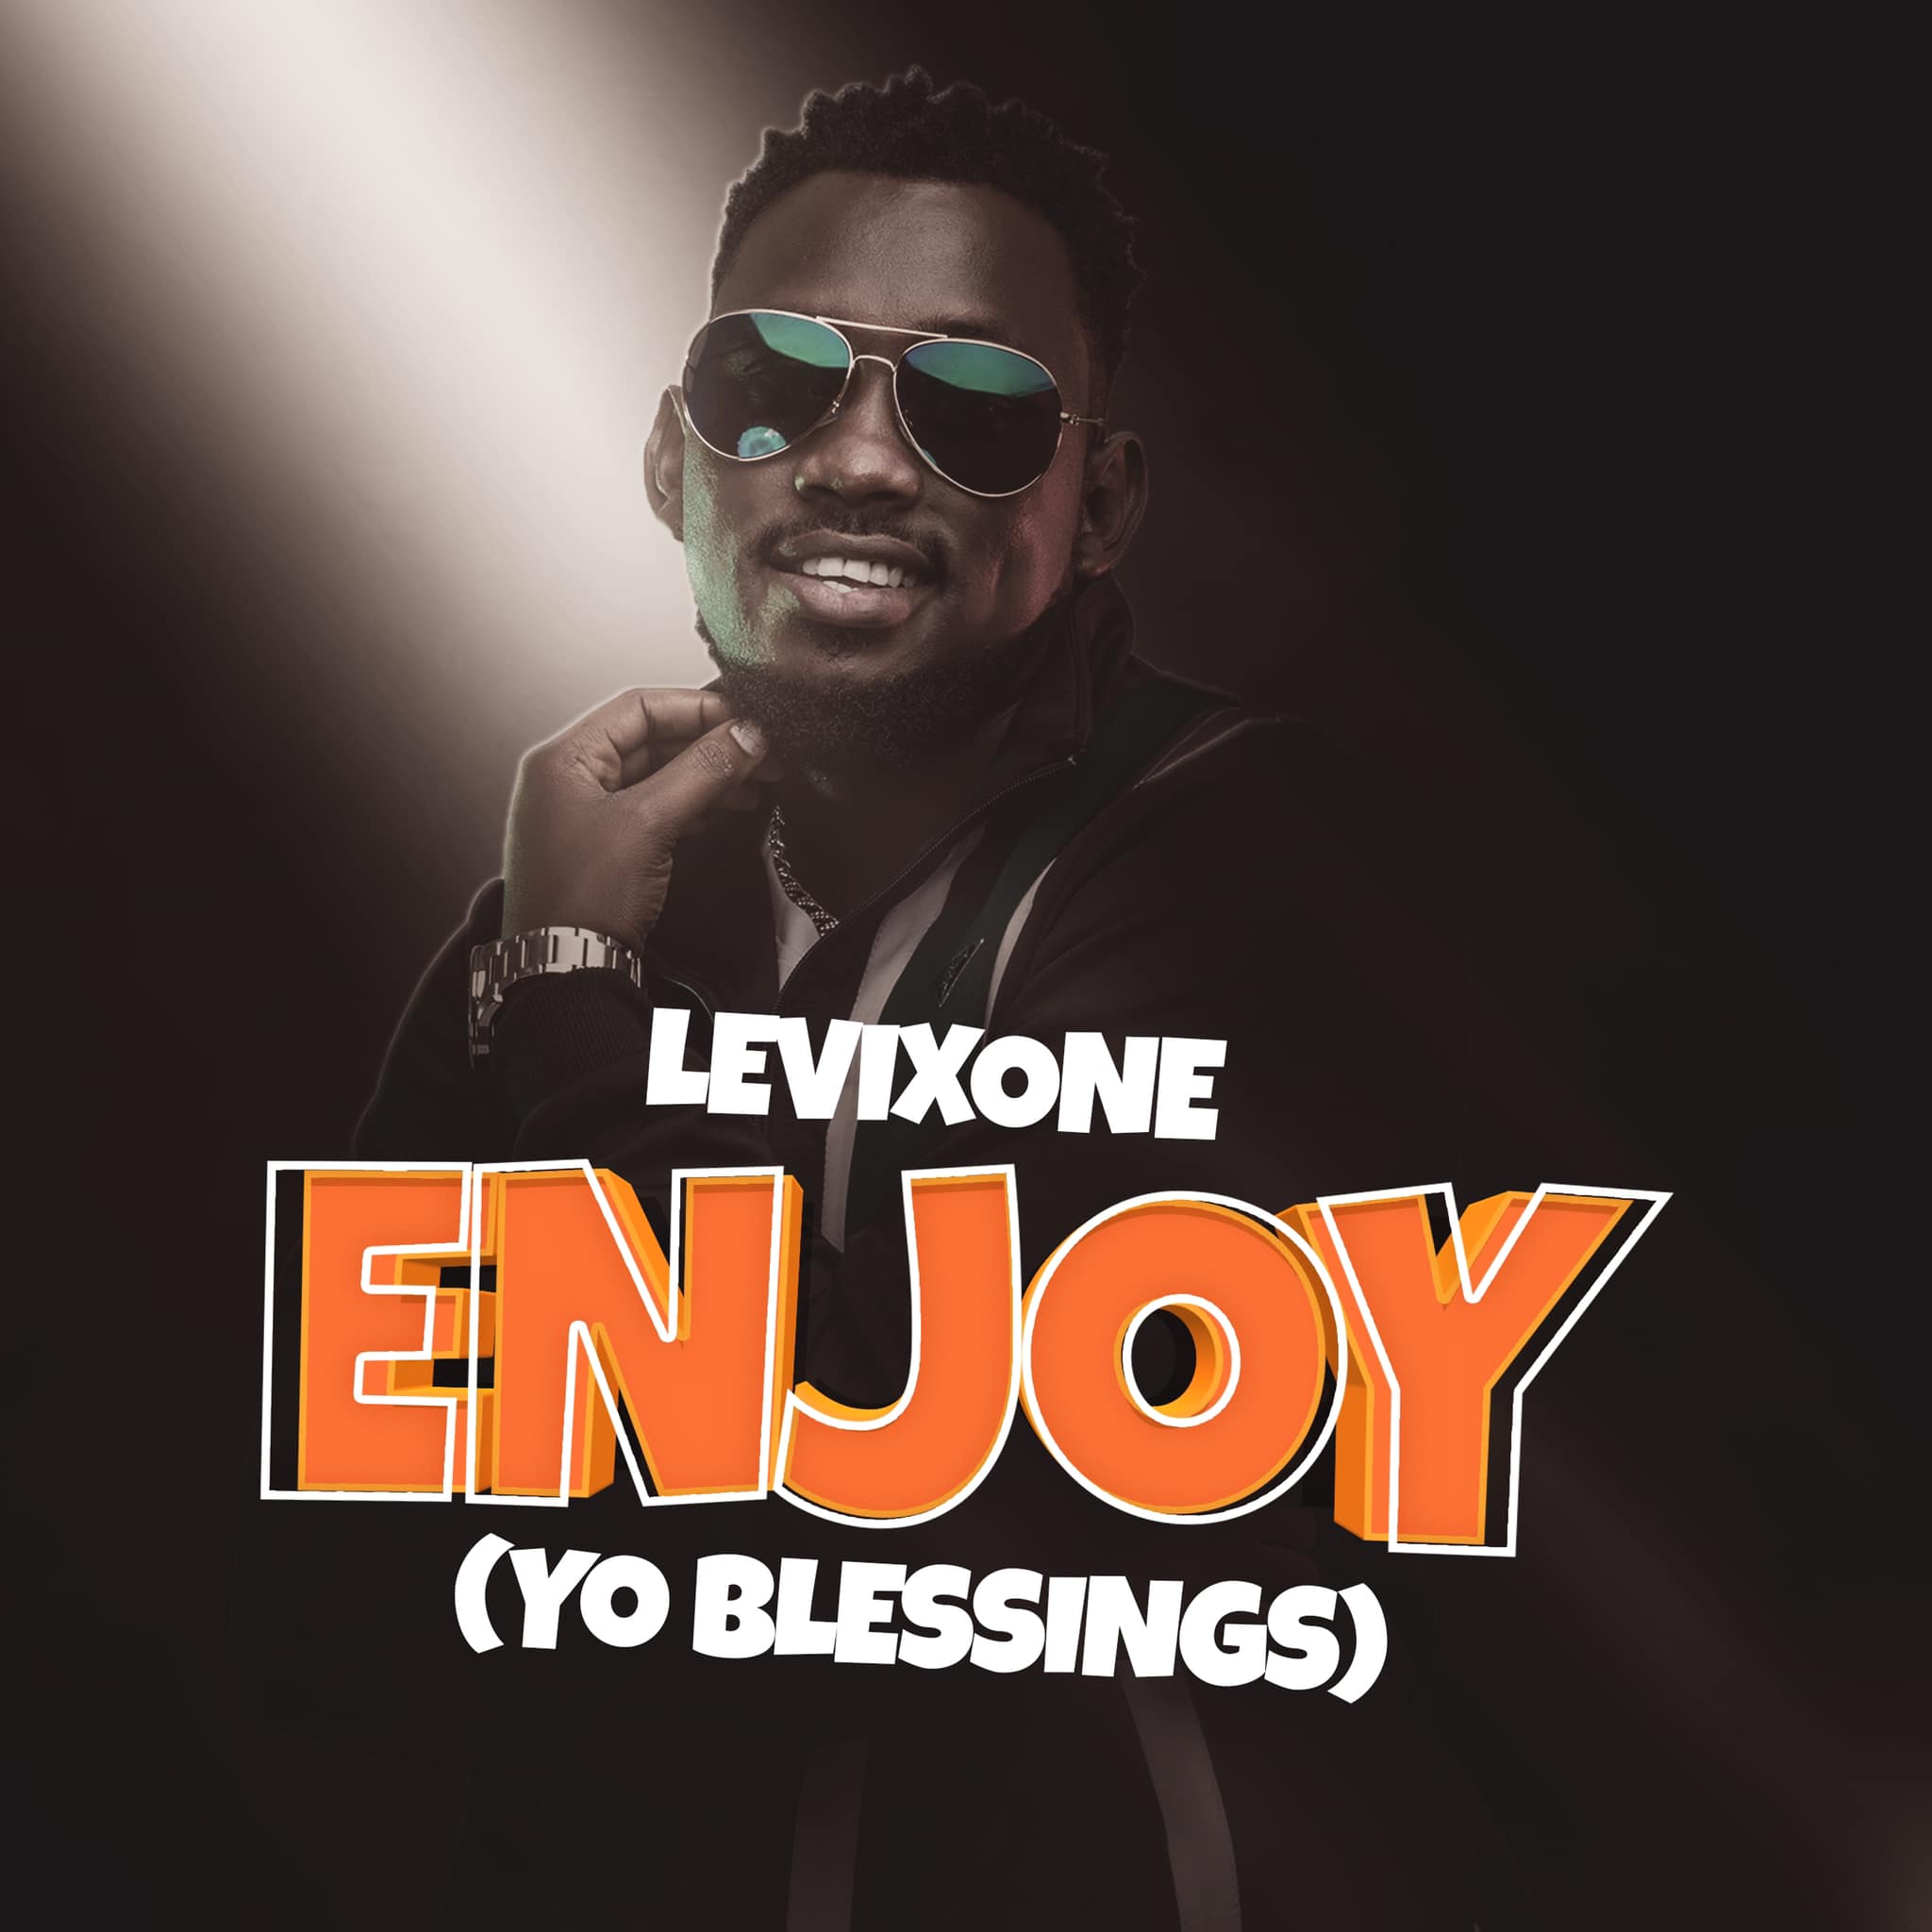 Levixone Enjoy Yo Blessings